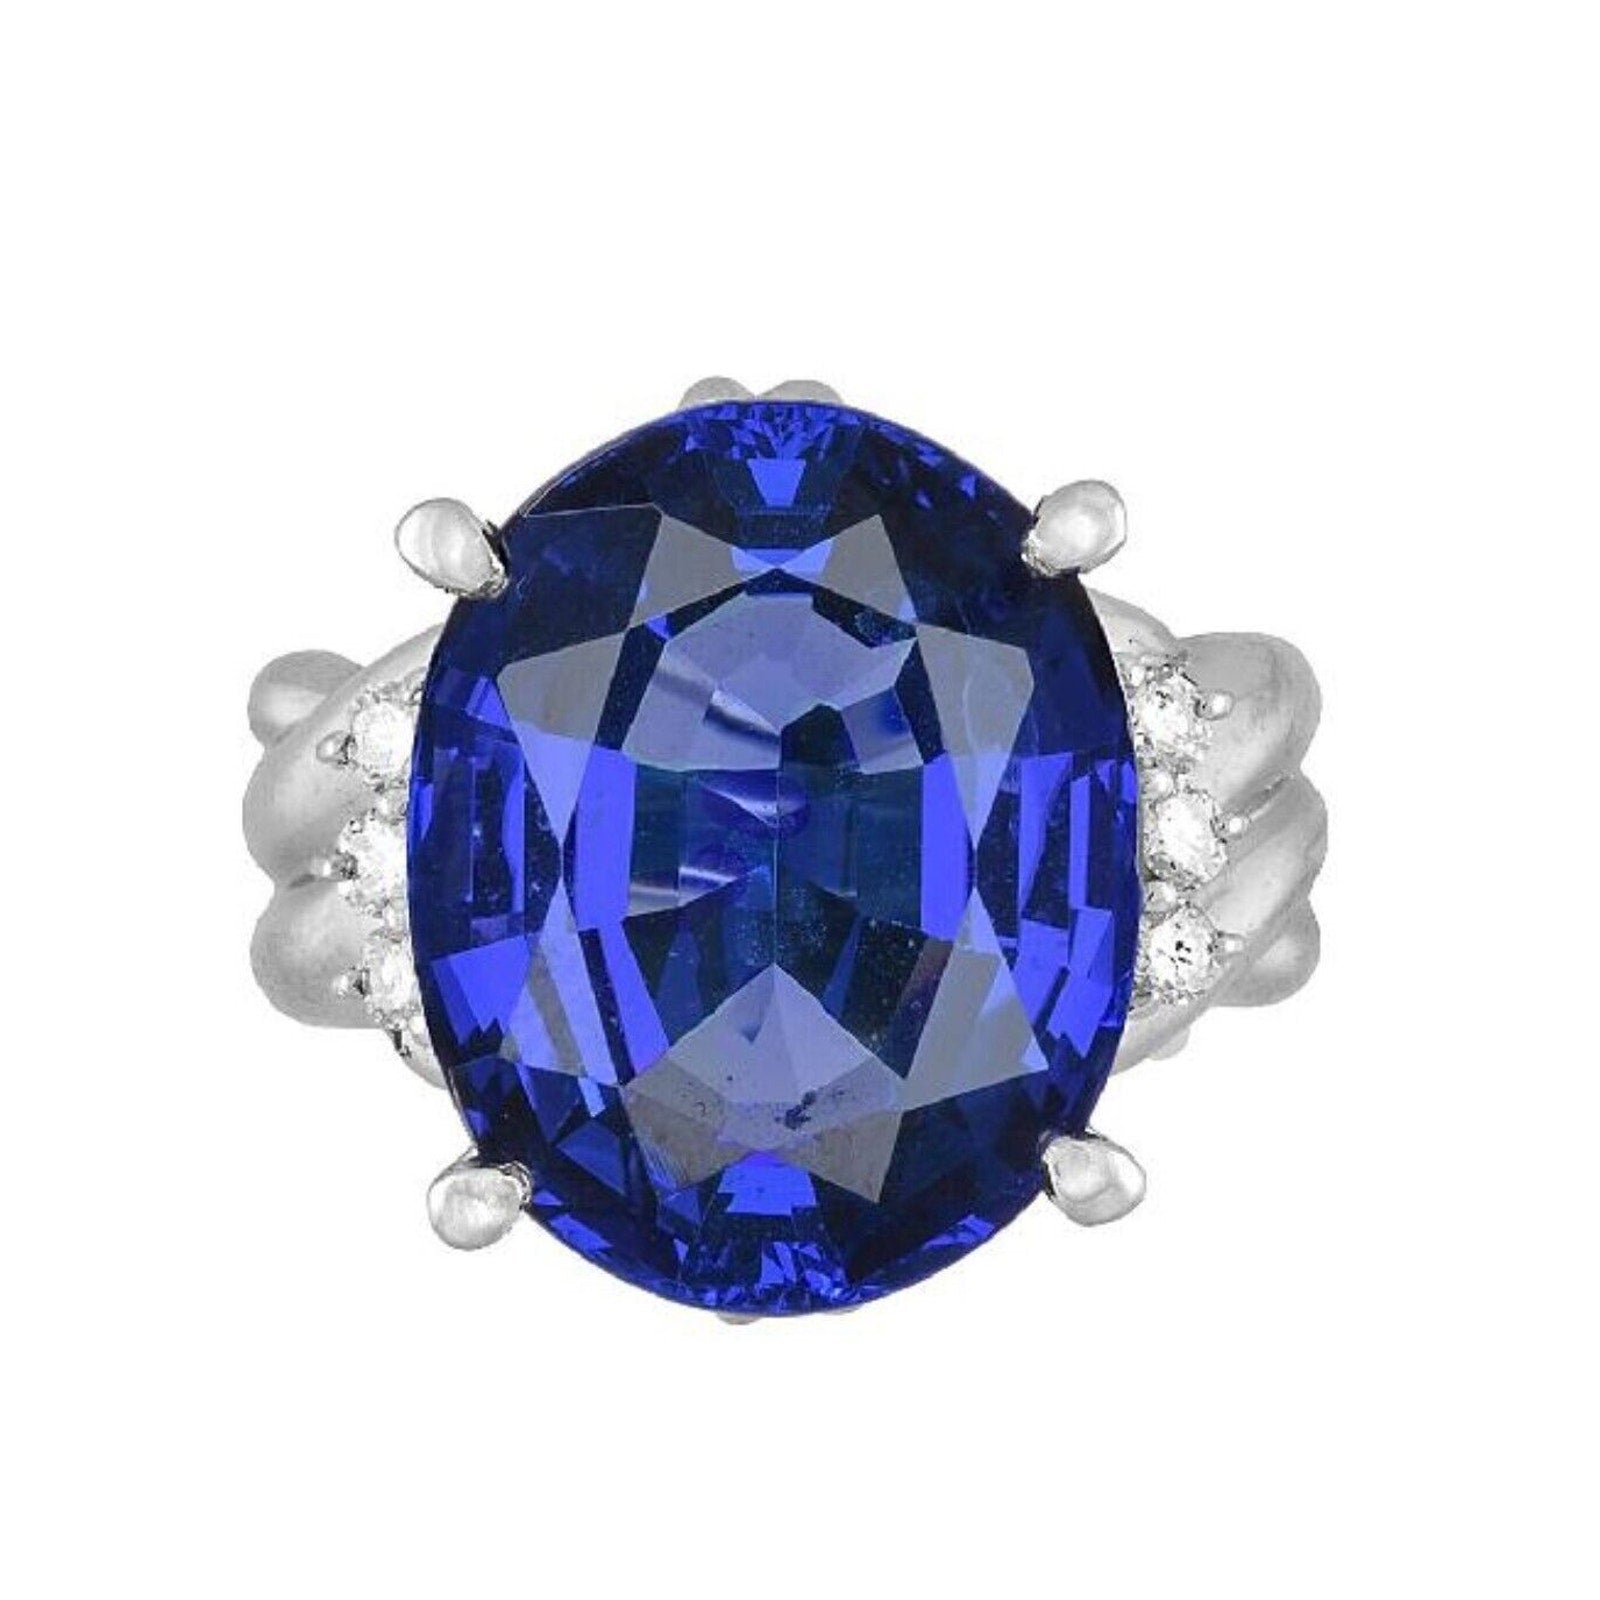 GIA 12.80 carats Oval Tanzanite & Diamond Cocktail Ring in Platinum - HM2171B